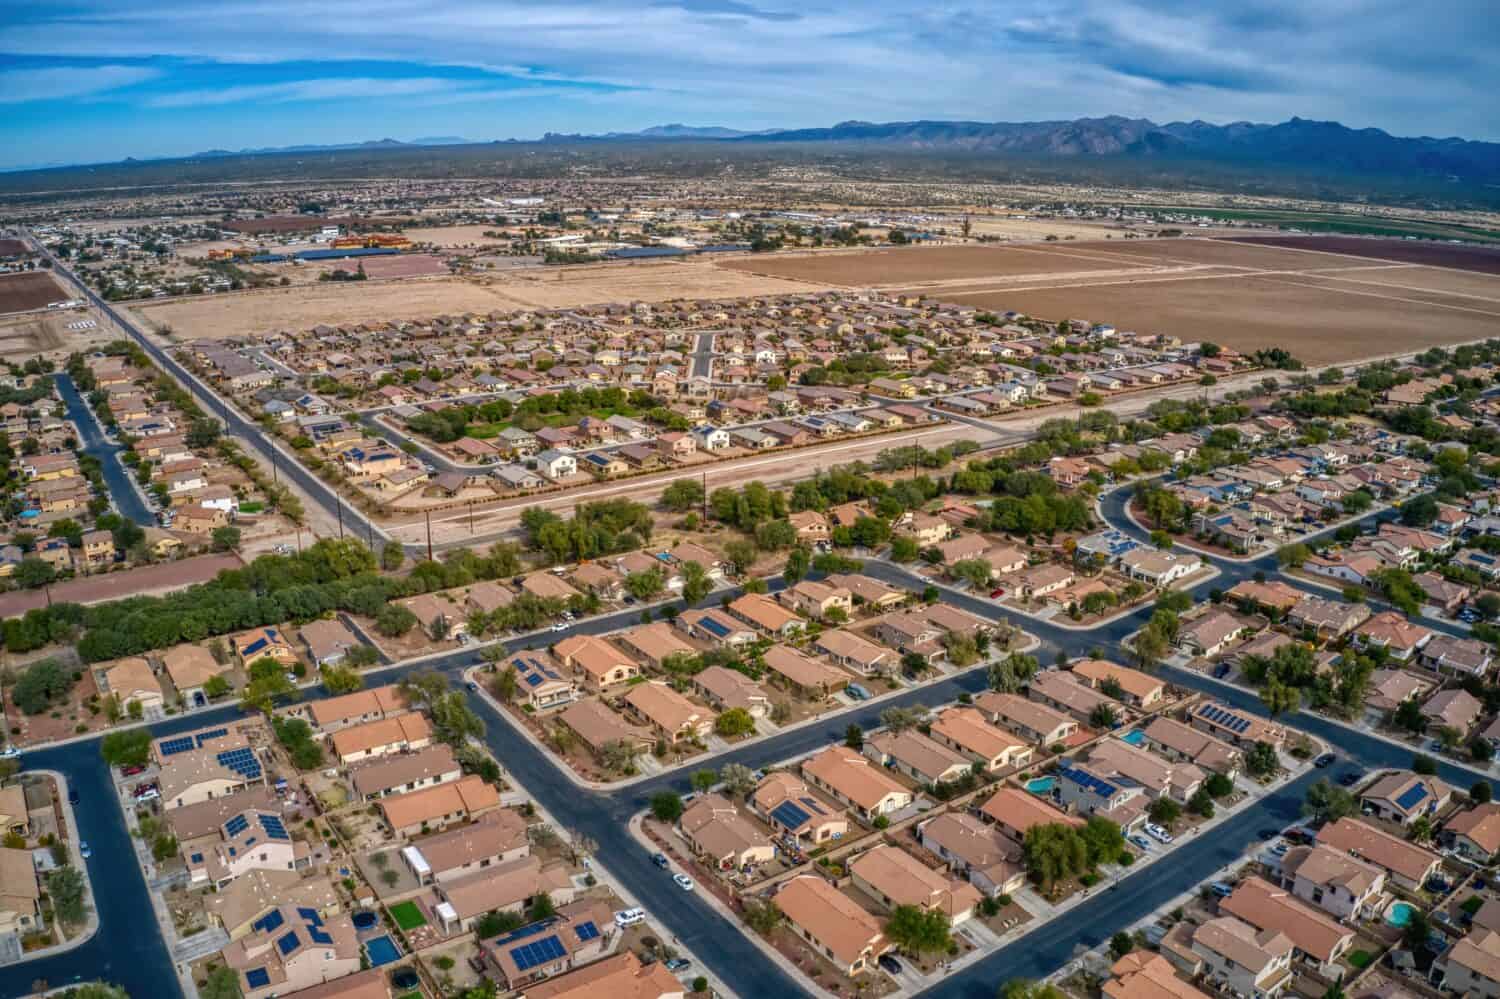 Aerial View of the Tucson Suburb of Marana, Arizona.